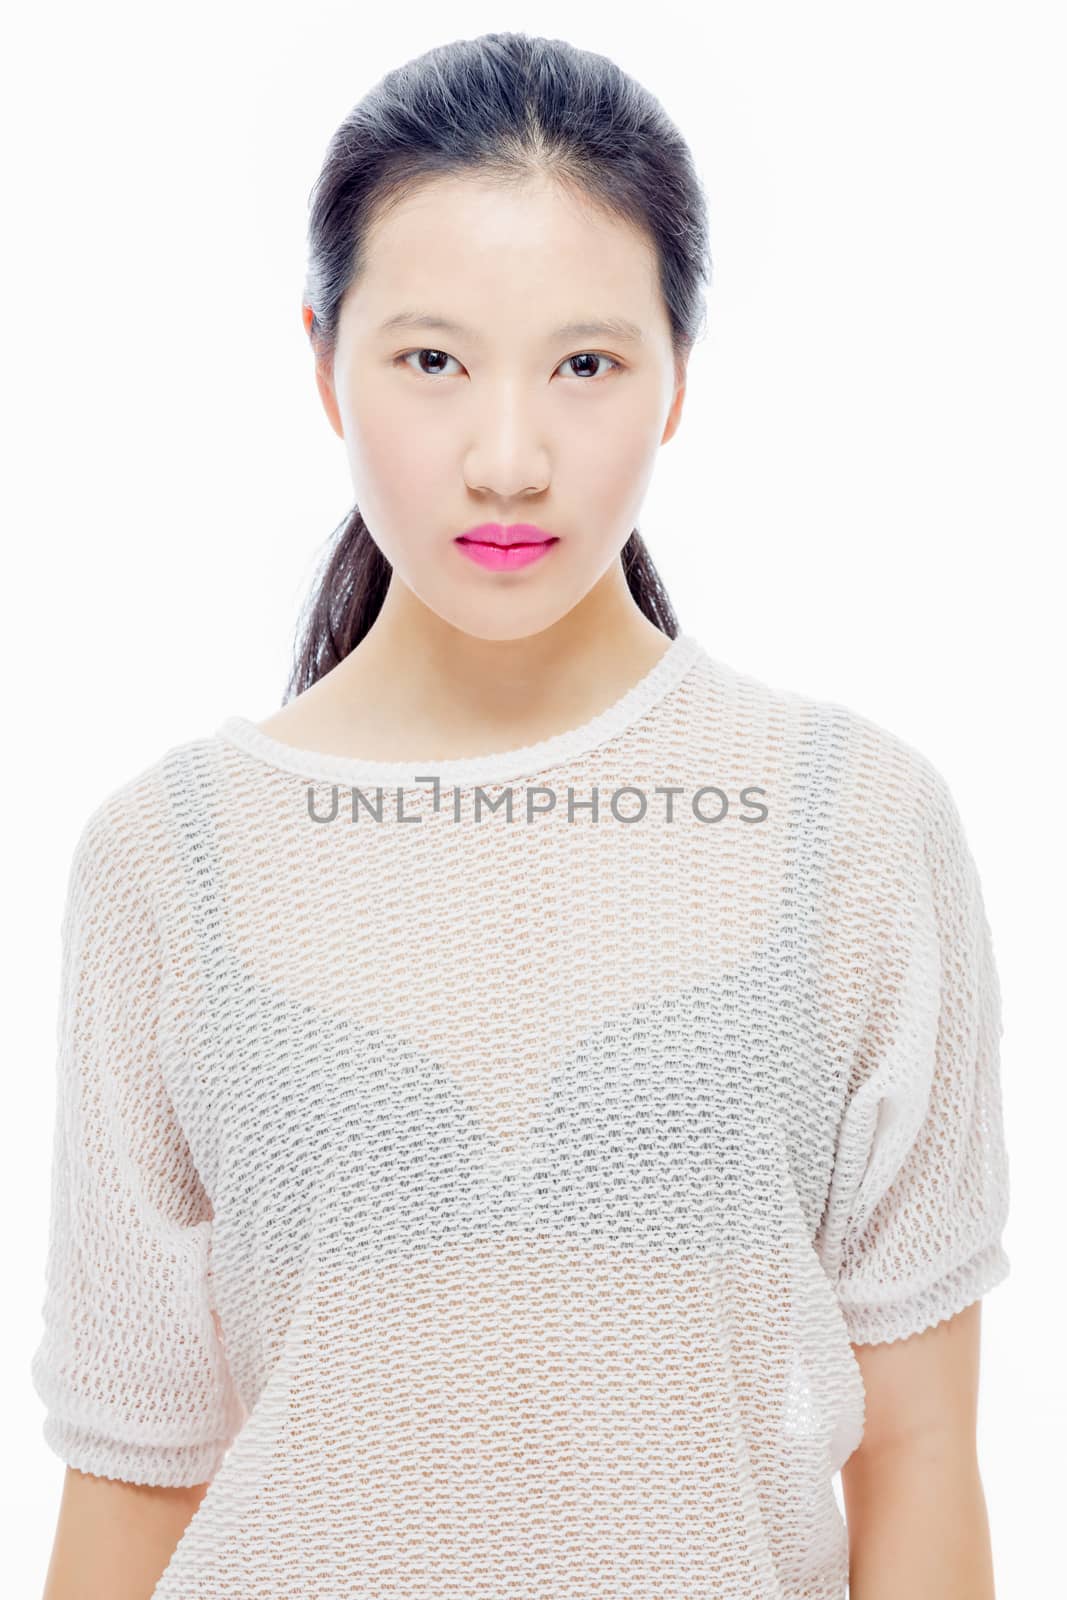 Beauty portrait of Asian teenage high school girl